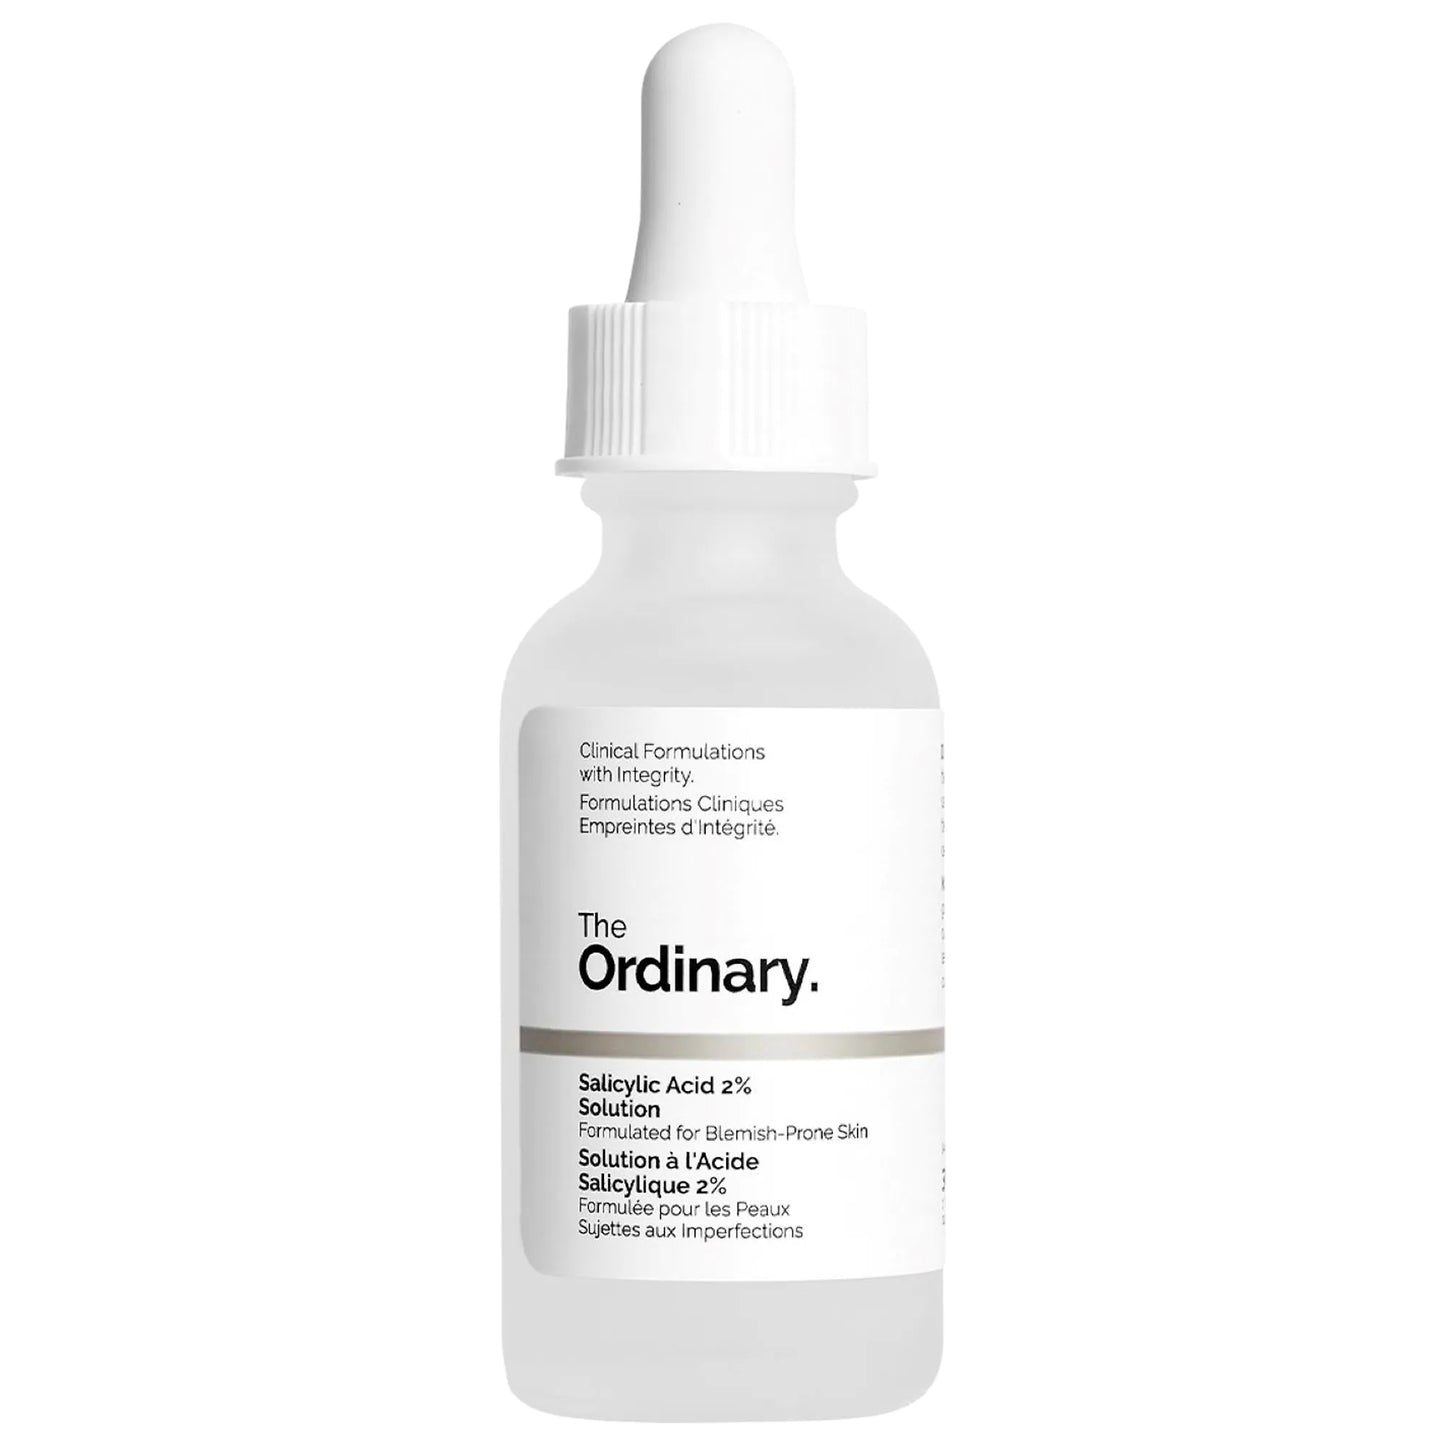 The Ordinary - Salicylic Acid 2% Solution Blemish-Prone skin